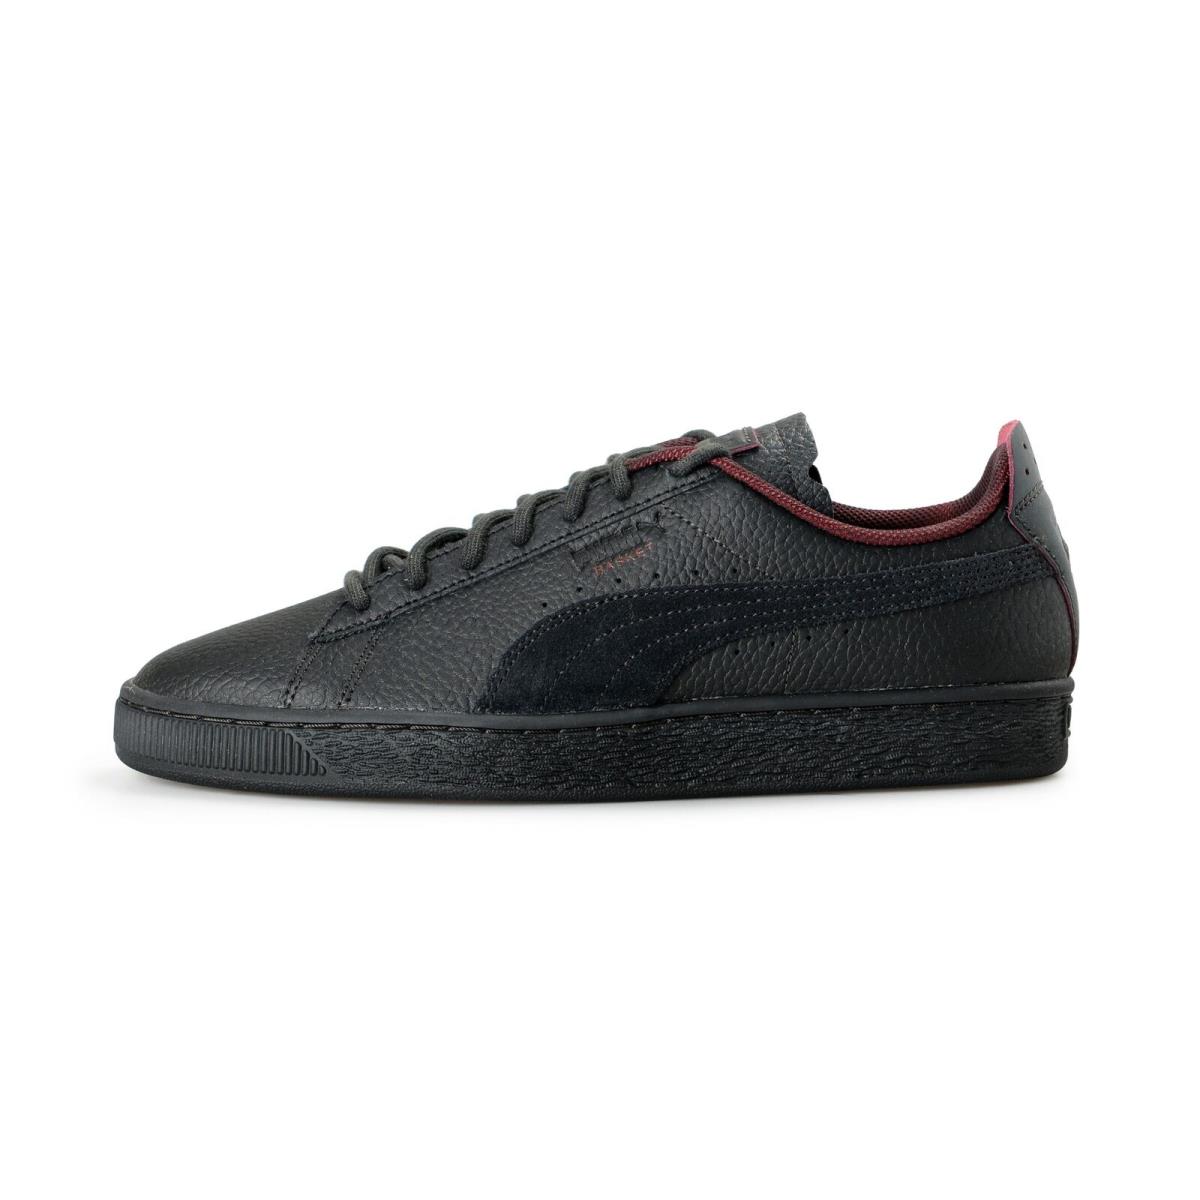 Puma X Scuderia Ferrari SF Basket LS Moonless Night Leather Sneakers Shoes - Black/Blue